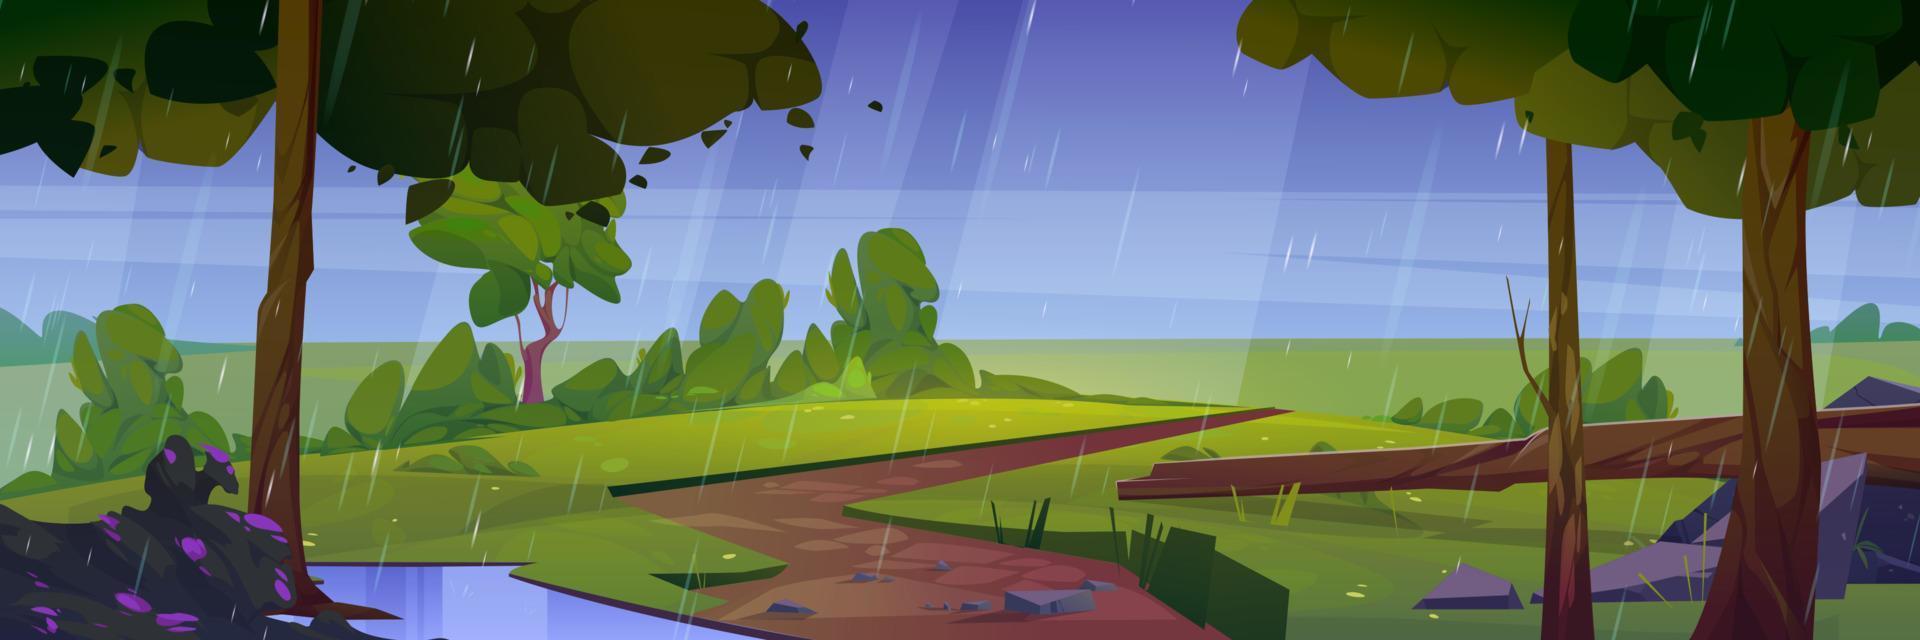 lluvia de verano naturaleza salvaje dibujos animados paisaje lluvioso vector